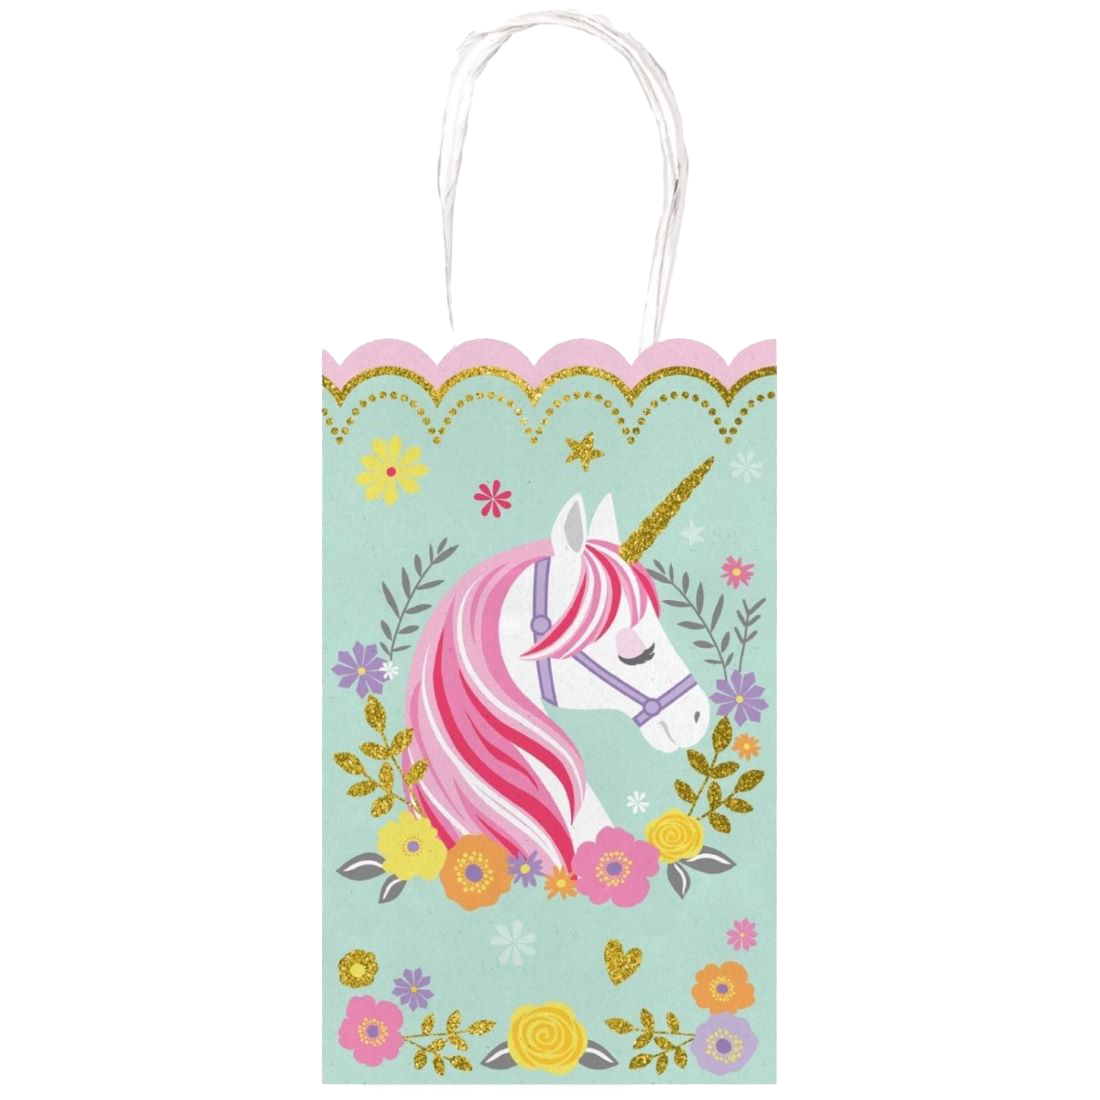 Magical Unicorn Glittered Treat Loot Bags